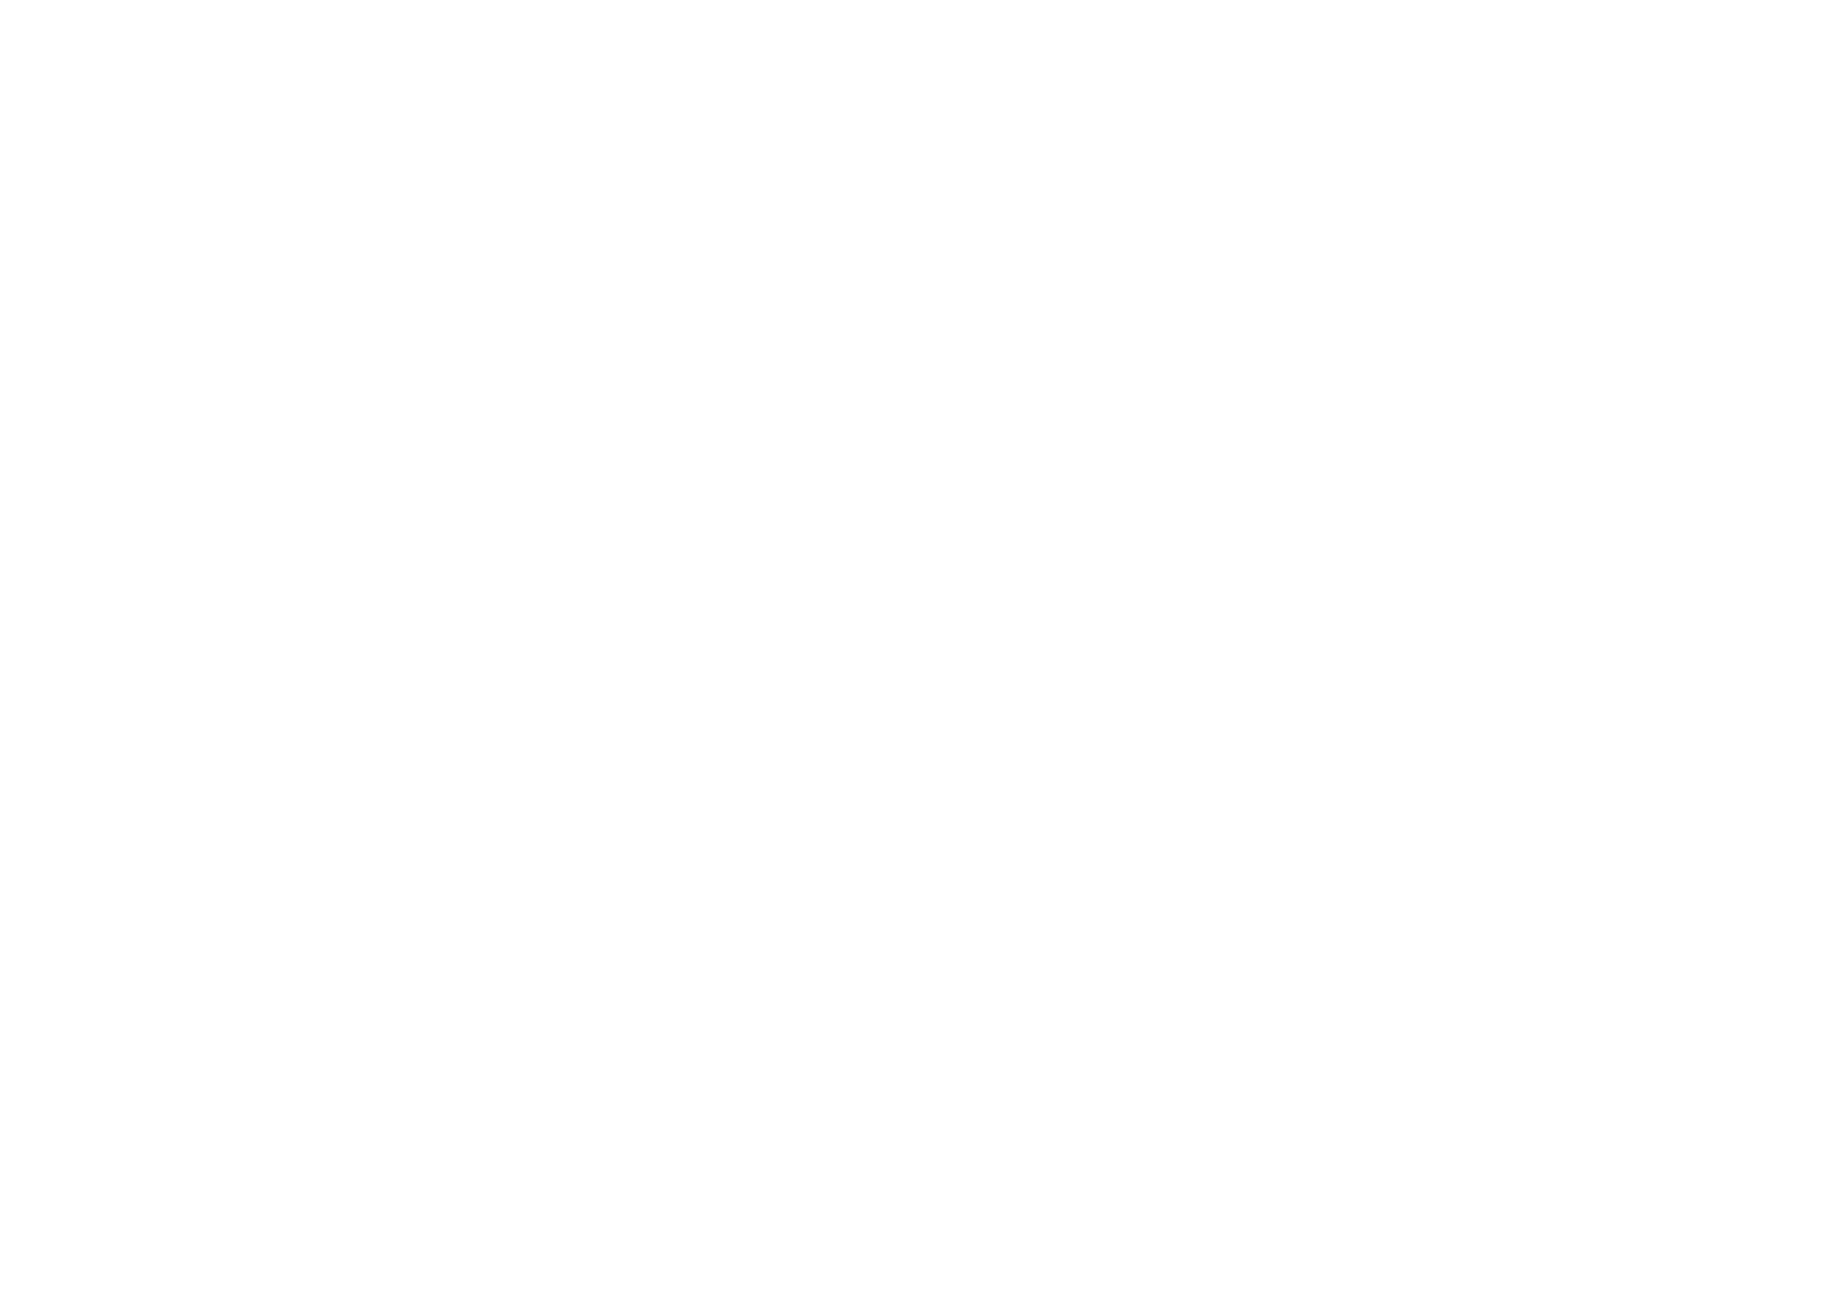 The Long Kiss Goodnight logo